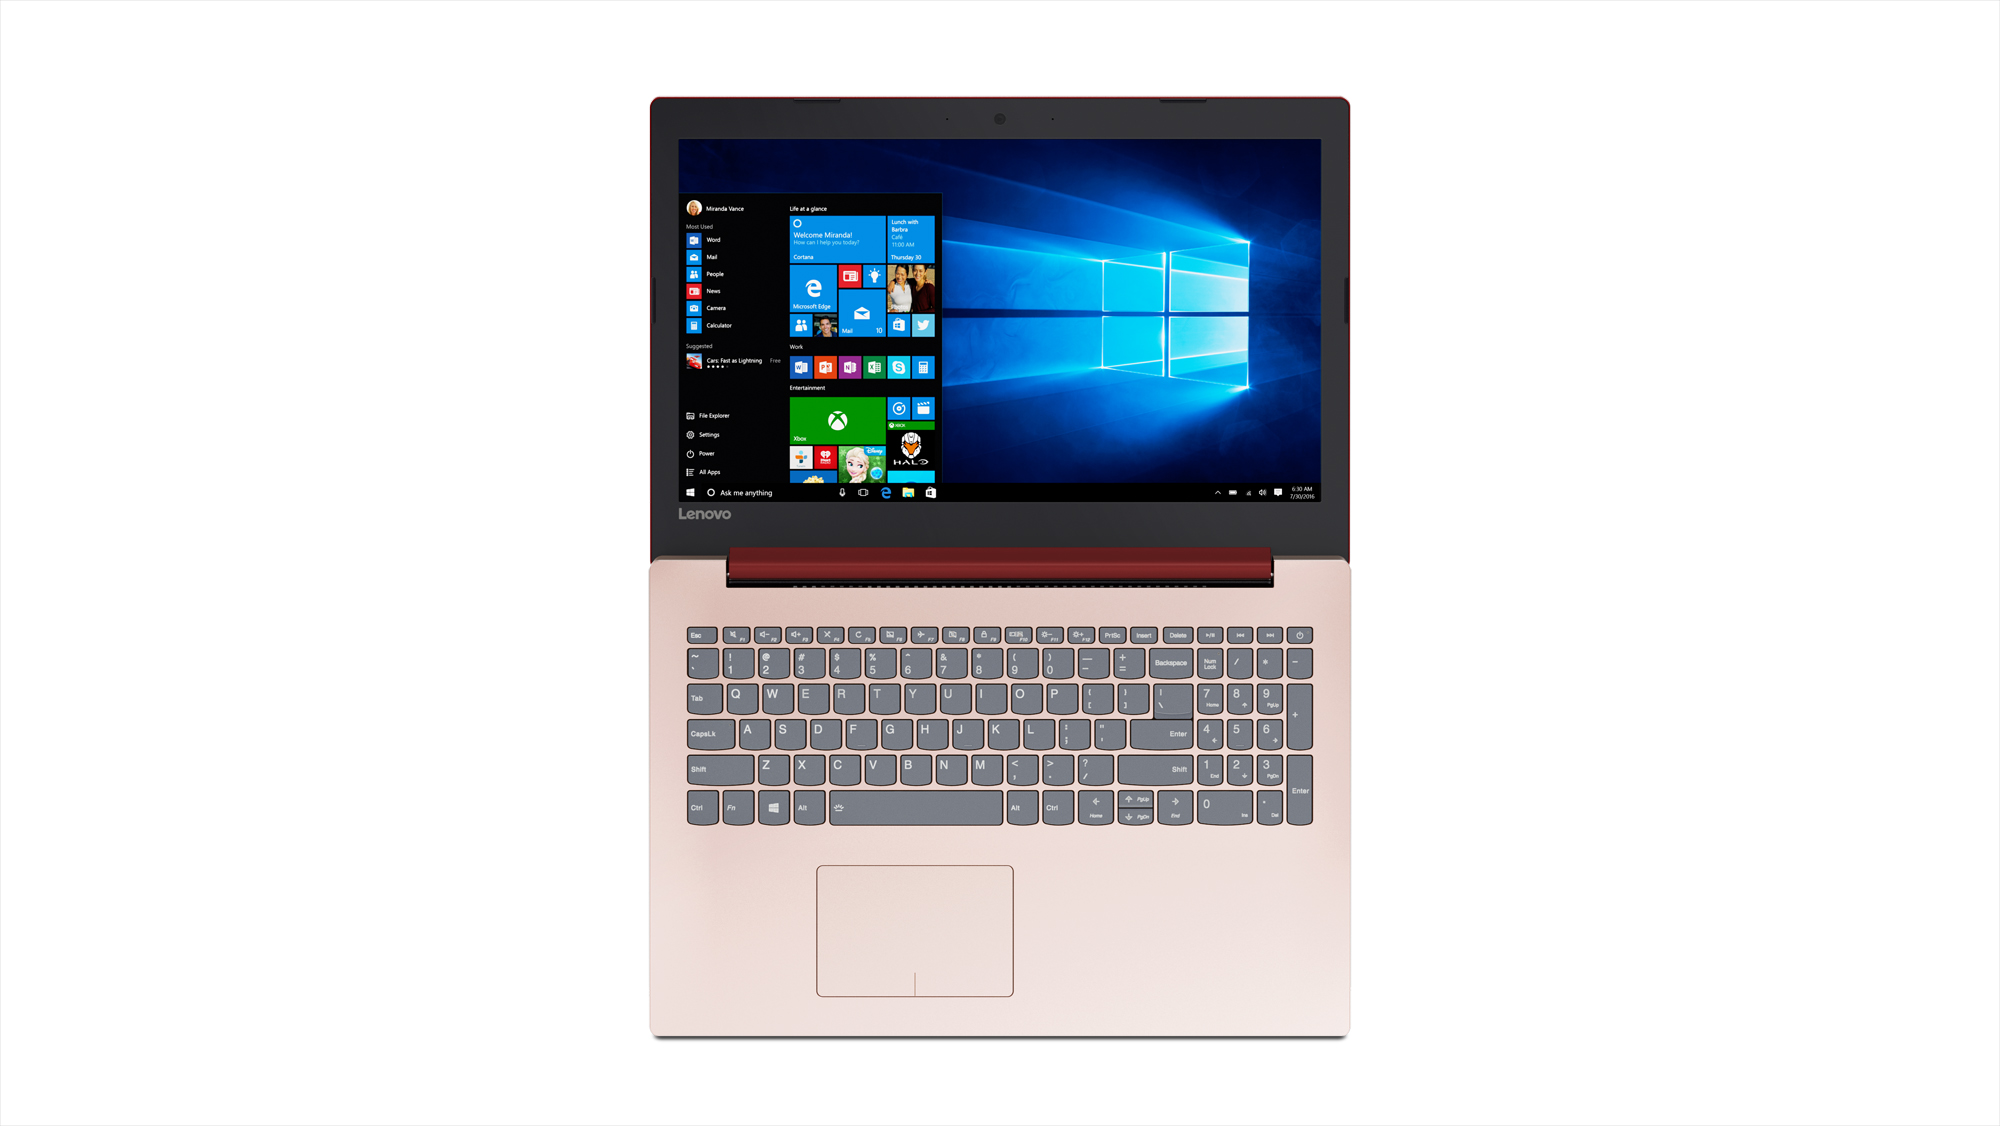 Lenovo 81DE00T0US ideapad 330 15.6" Laptop, Intel Core i3-8130U, 4GB RAM, 1TB HDD, Win 10, Coral Red - image 5 of 6